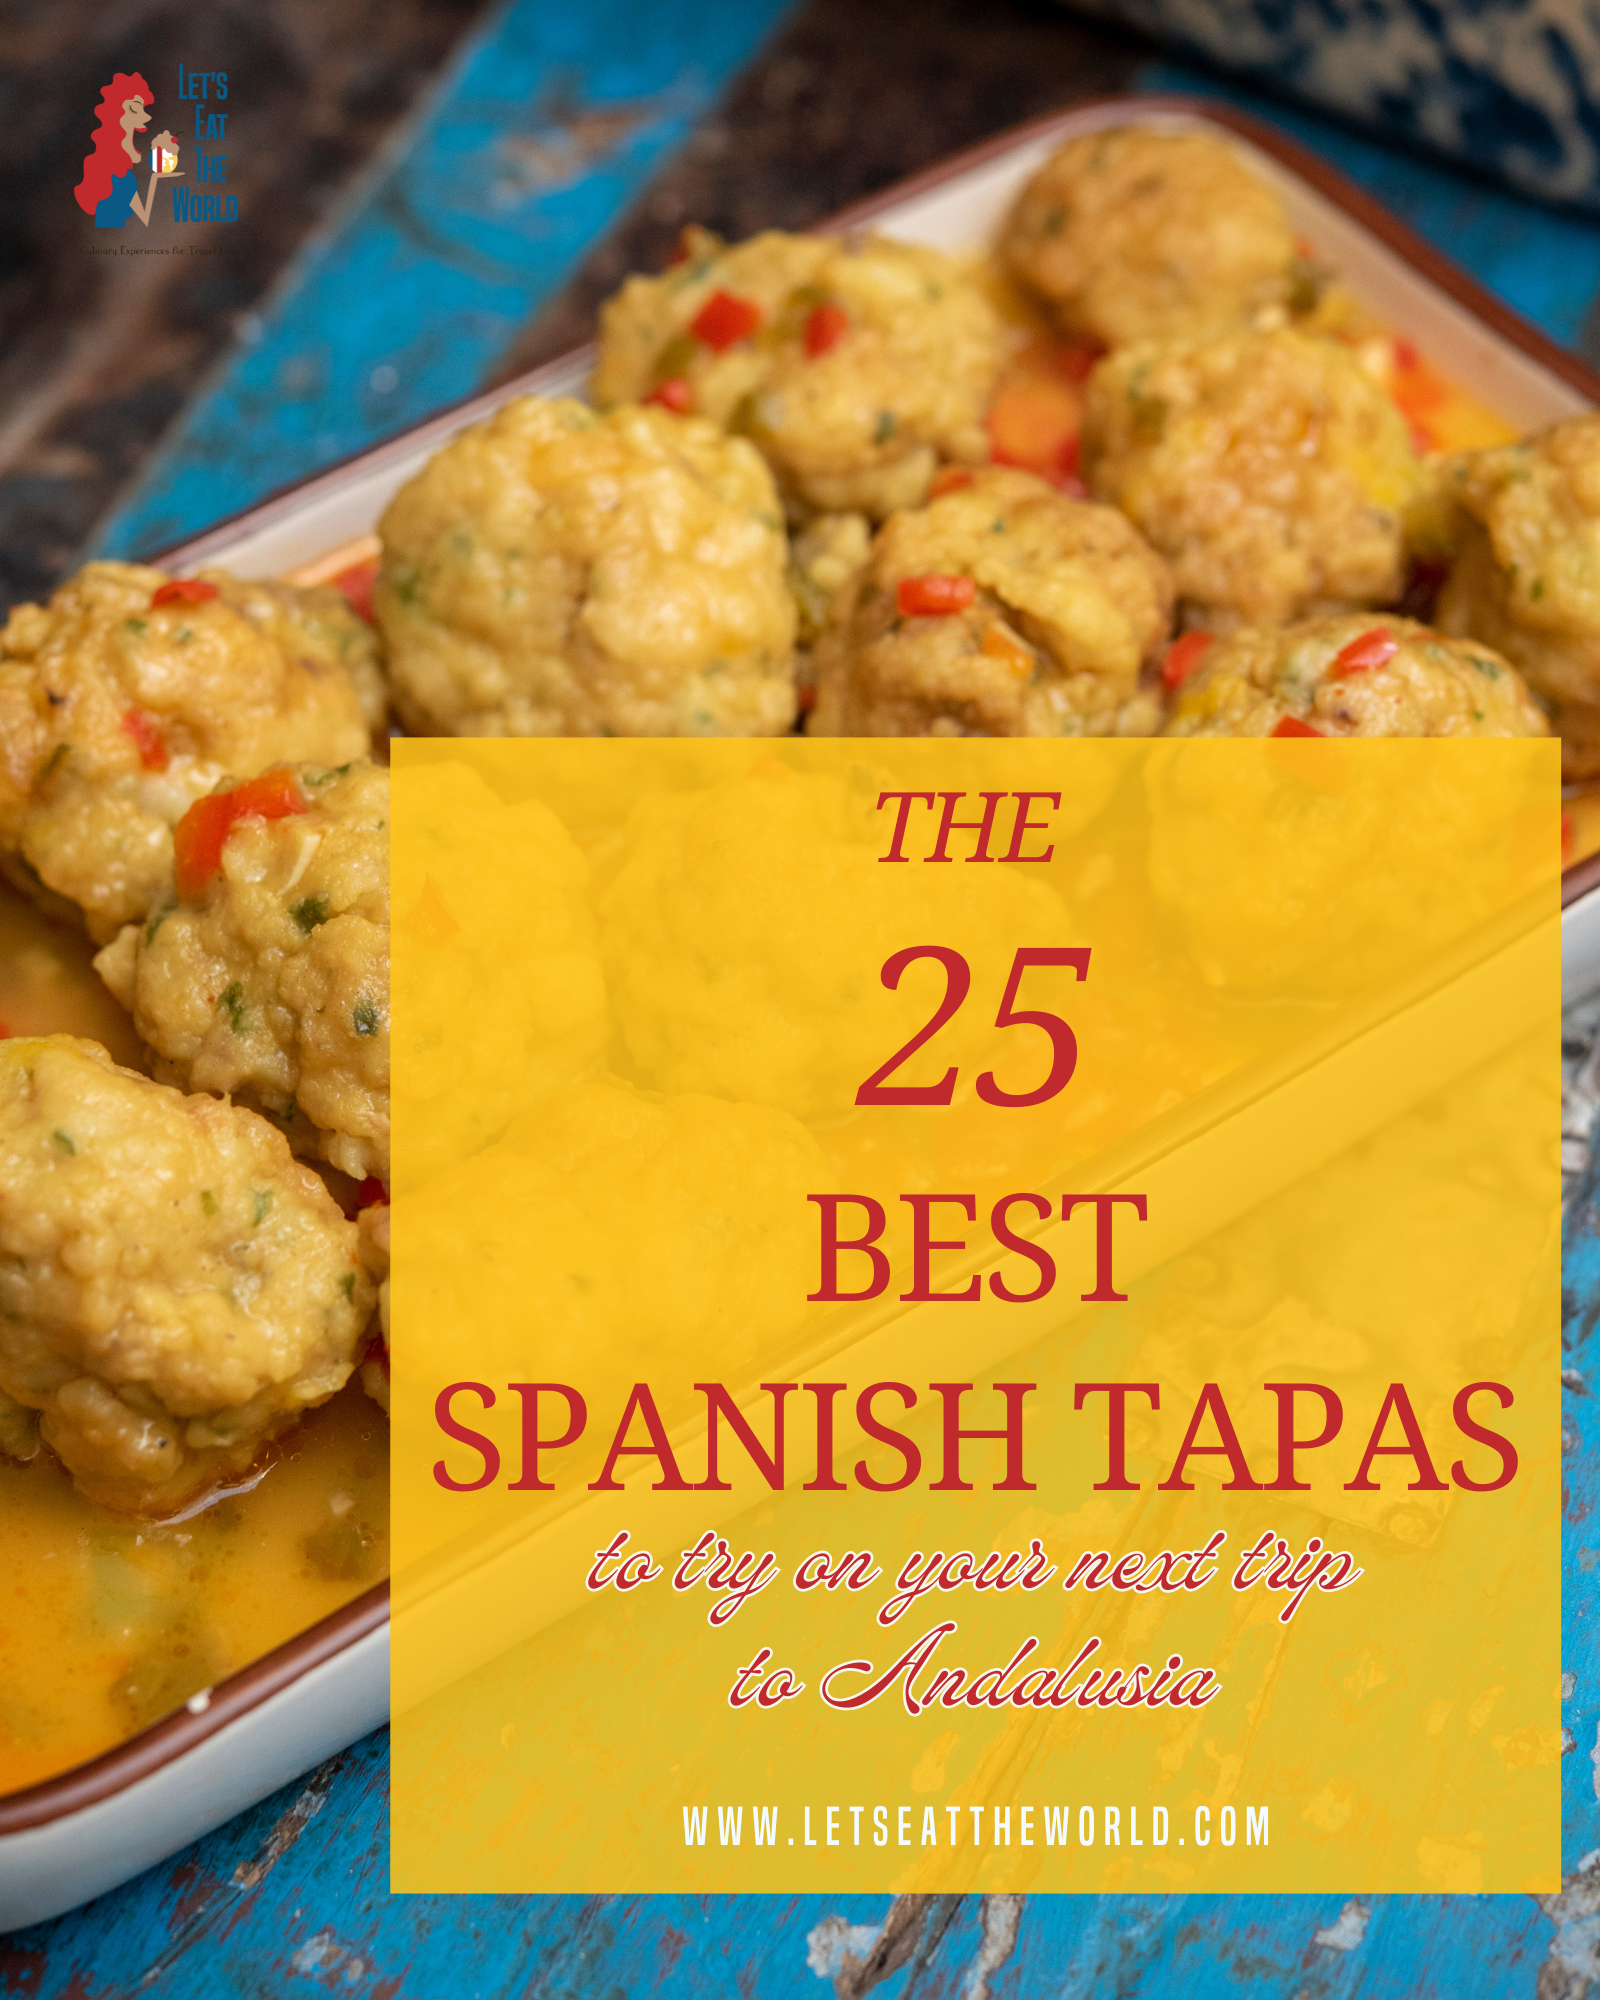 The 25 Best Spanish Tapas